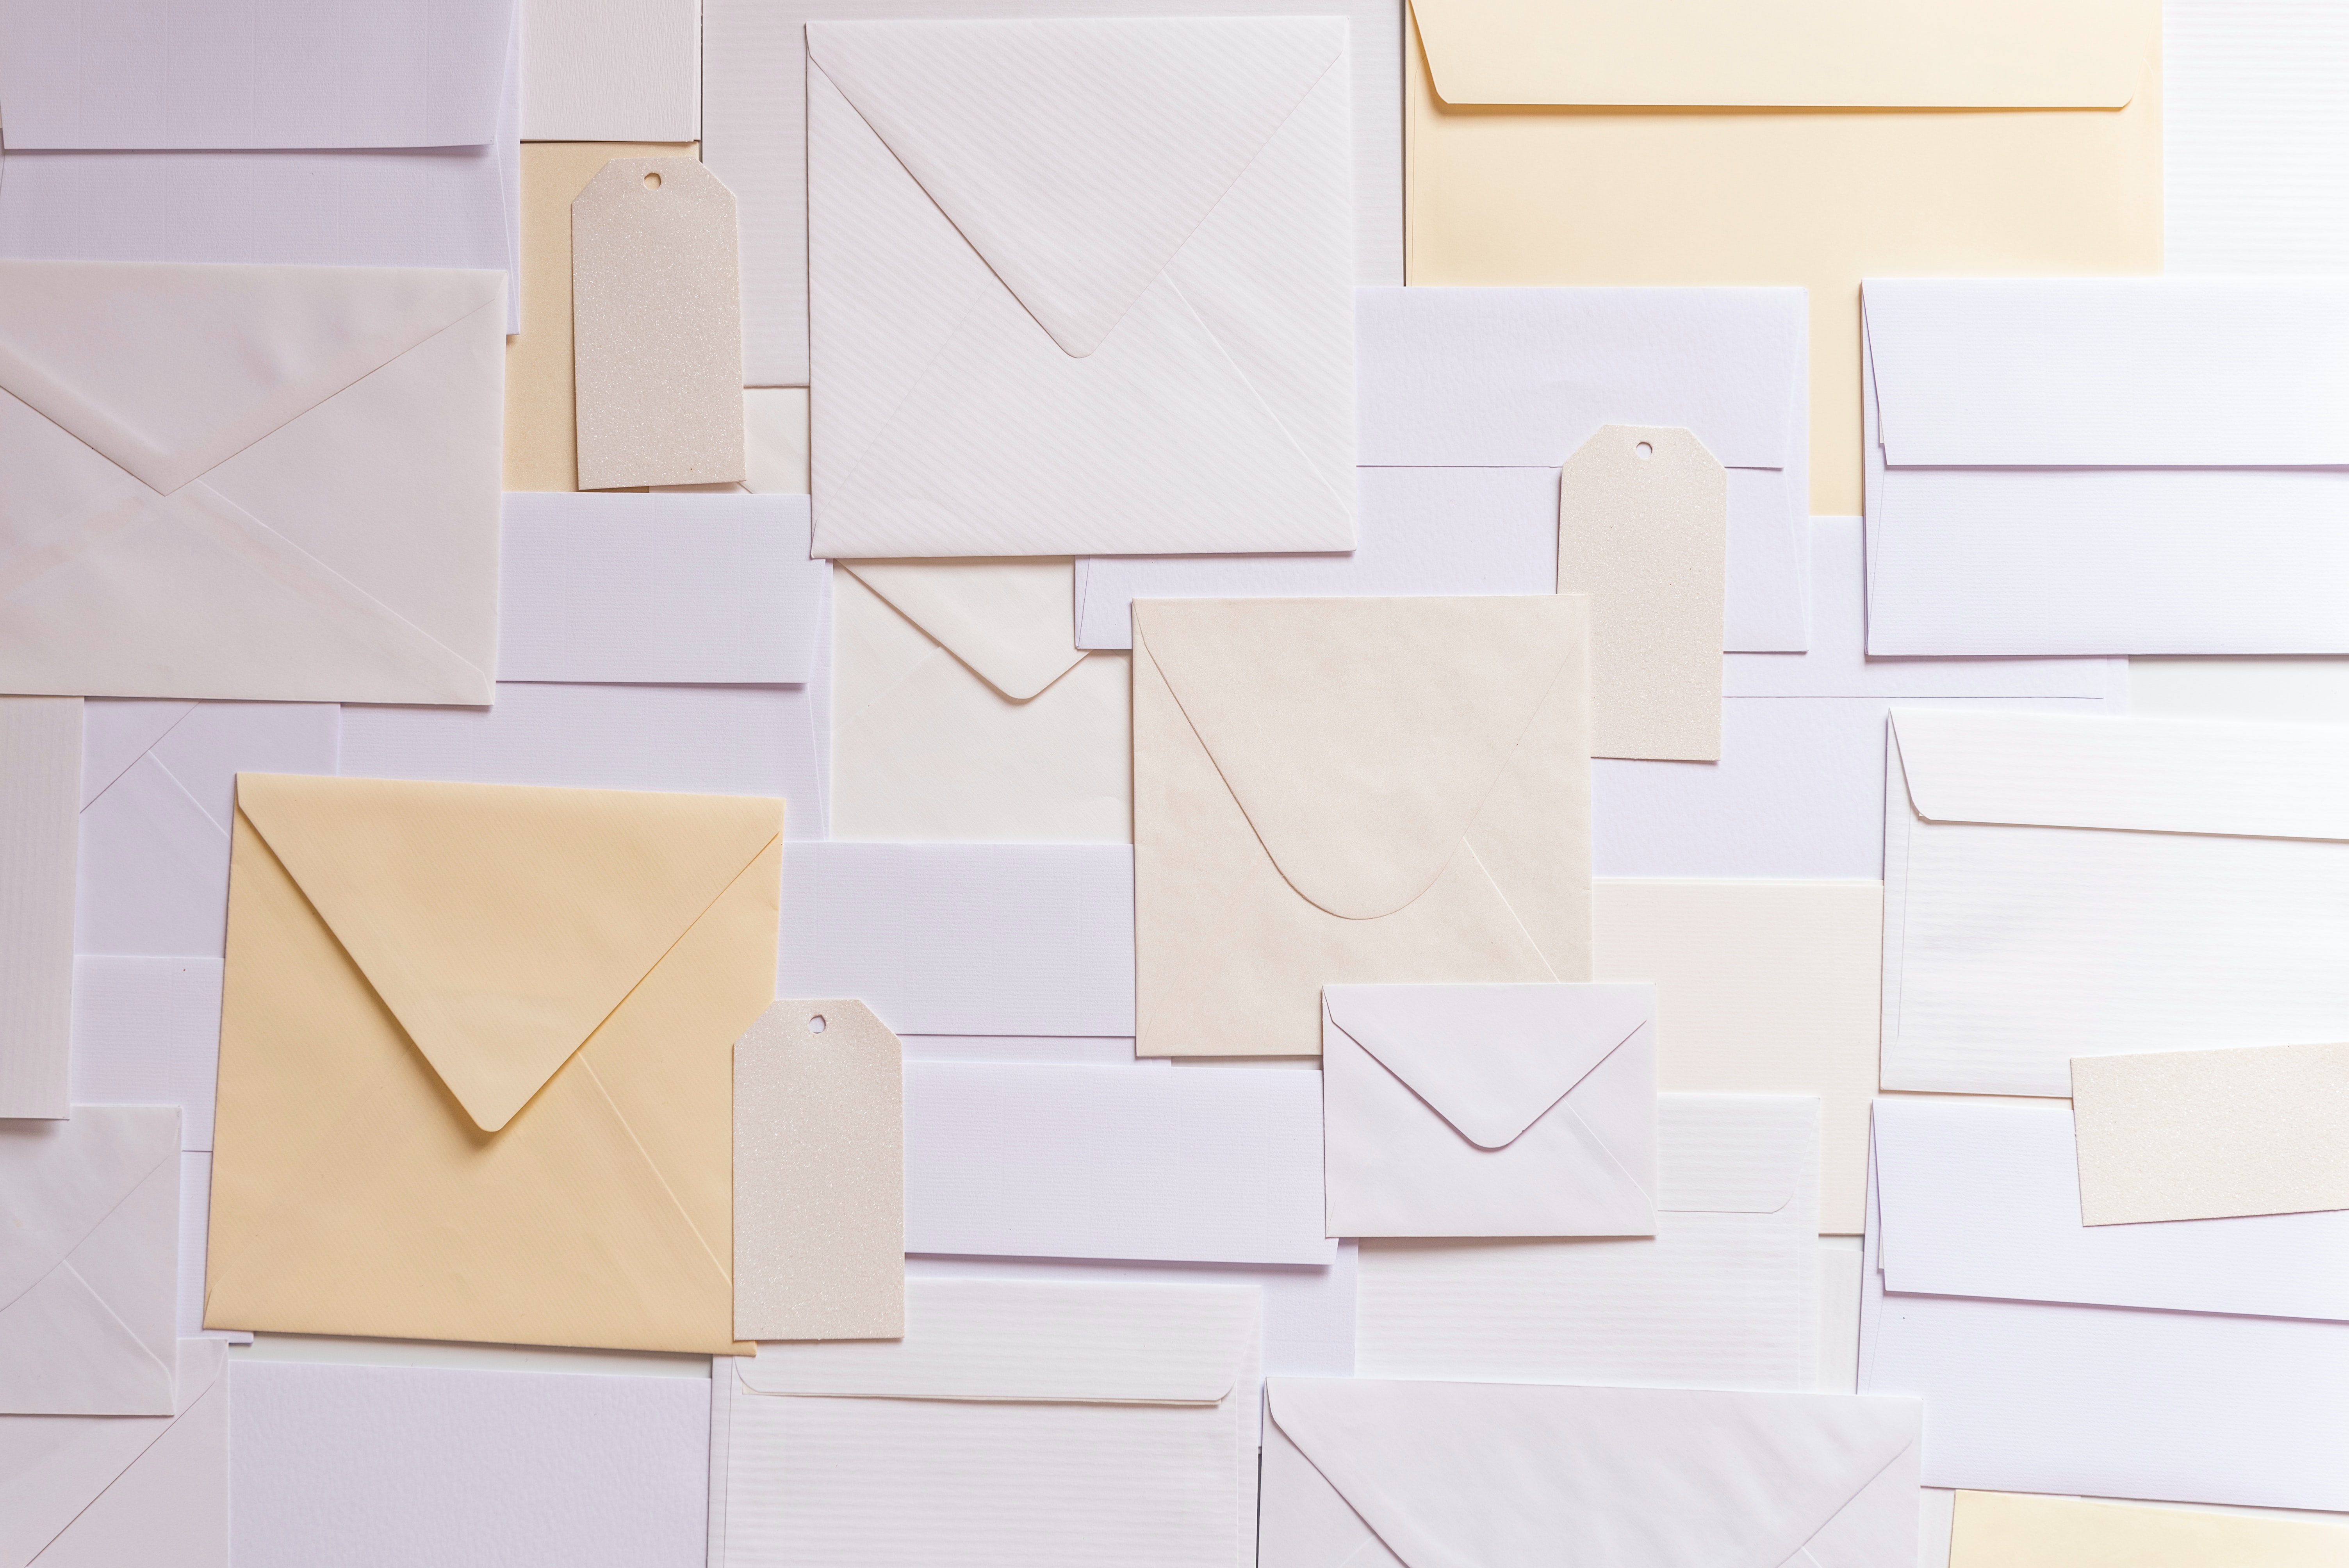 a collection of envelopes